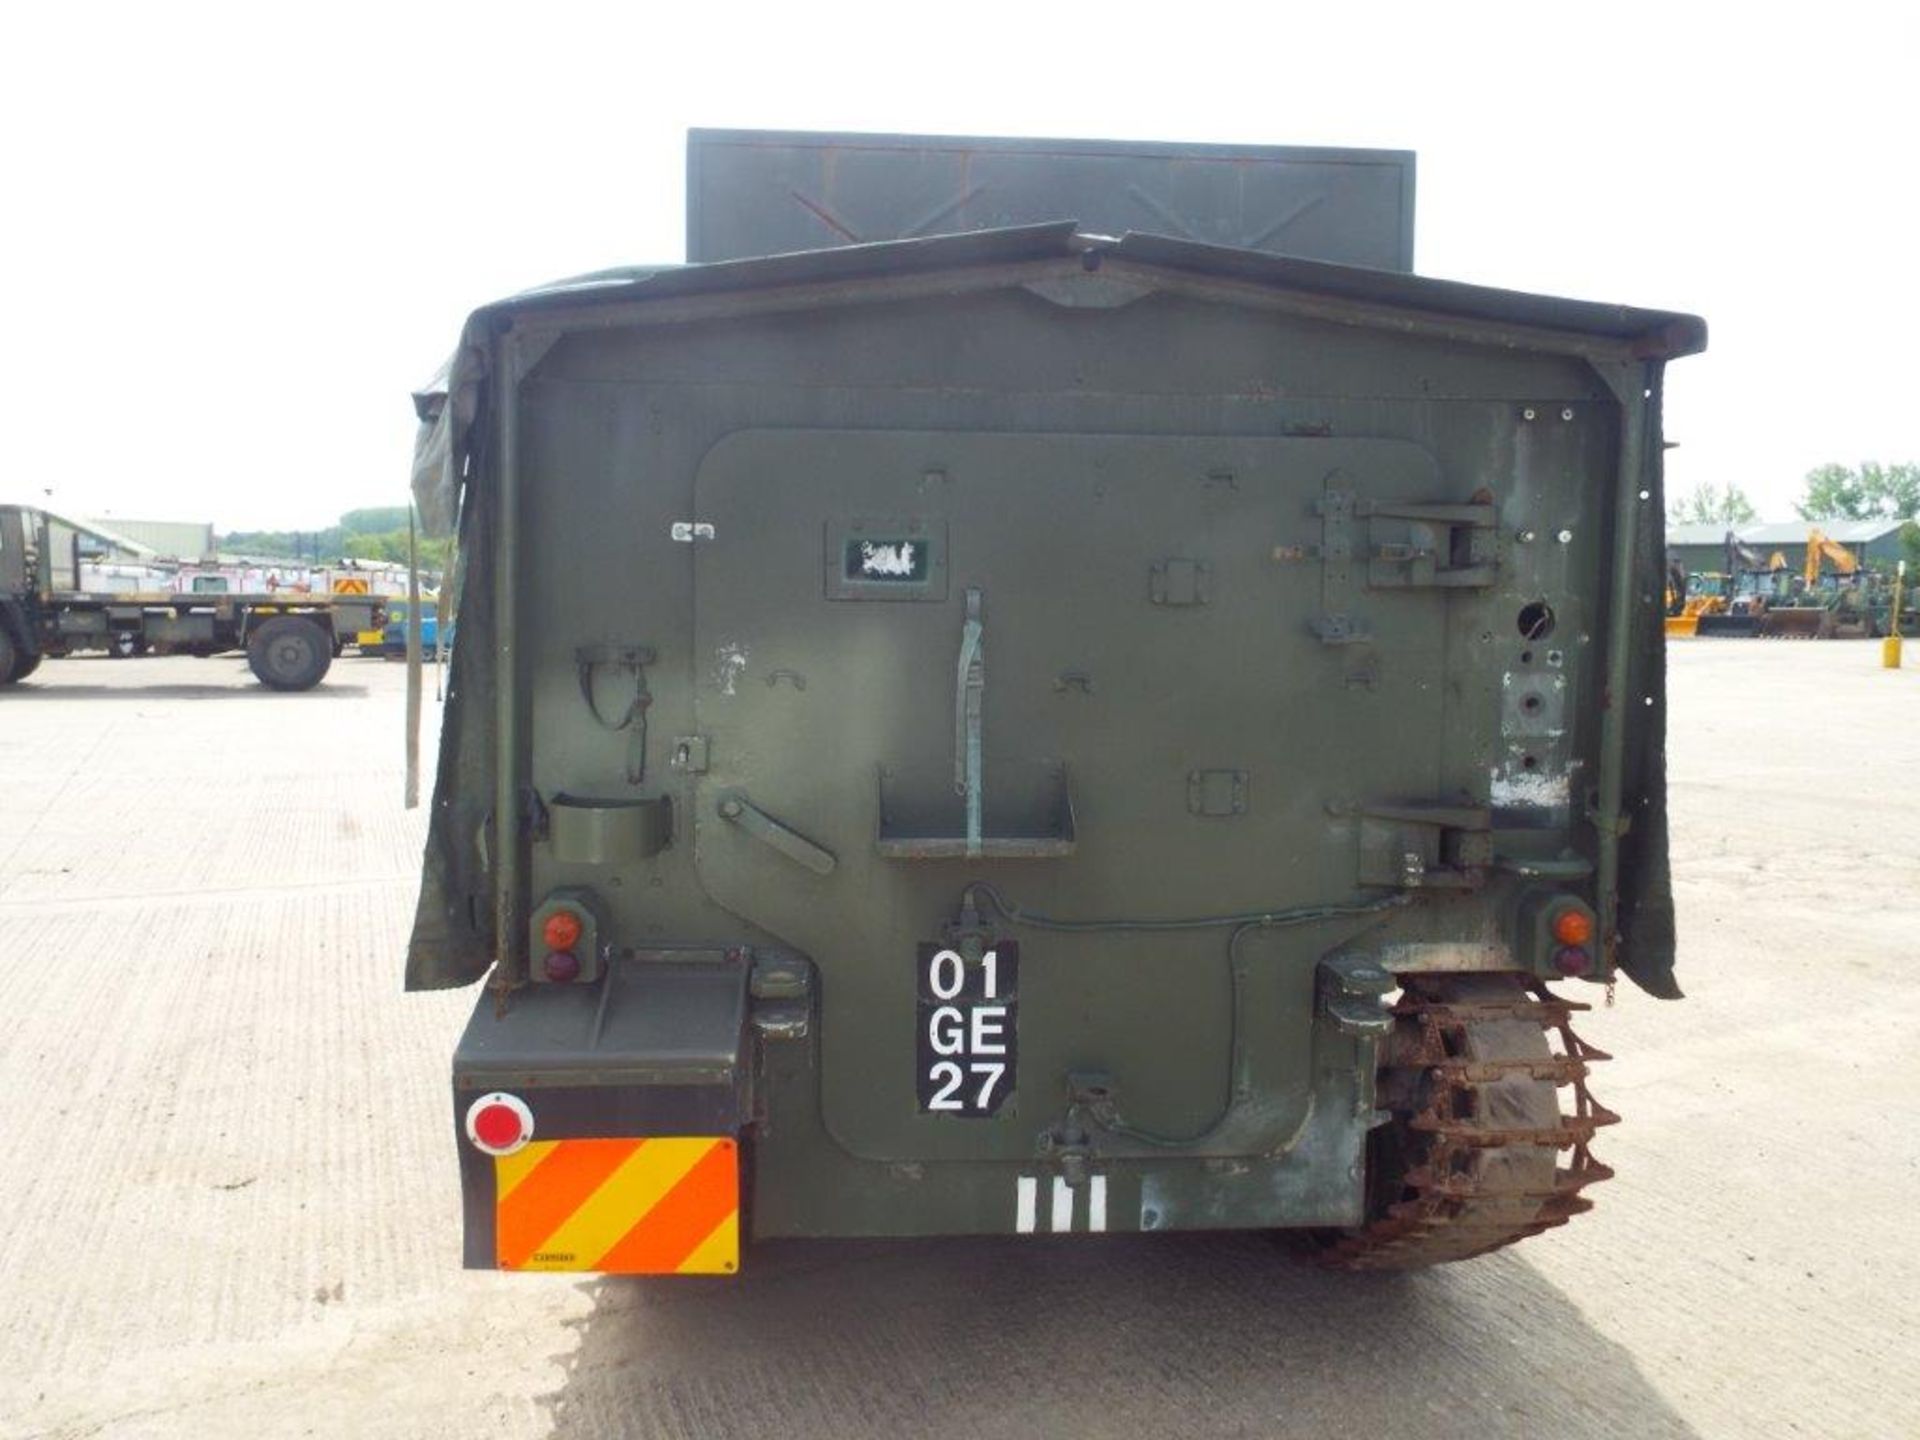 CVRT (Combat Vehicle Reconnaissance Tracked) Dieselised FV105 Sultan Armoured Personnel Carrier - Bild 6 aus 28